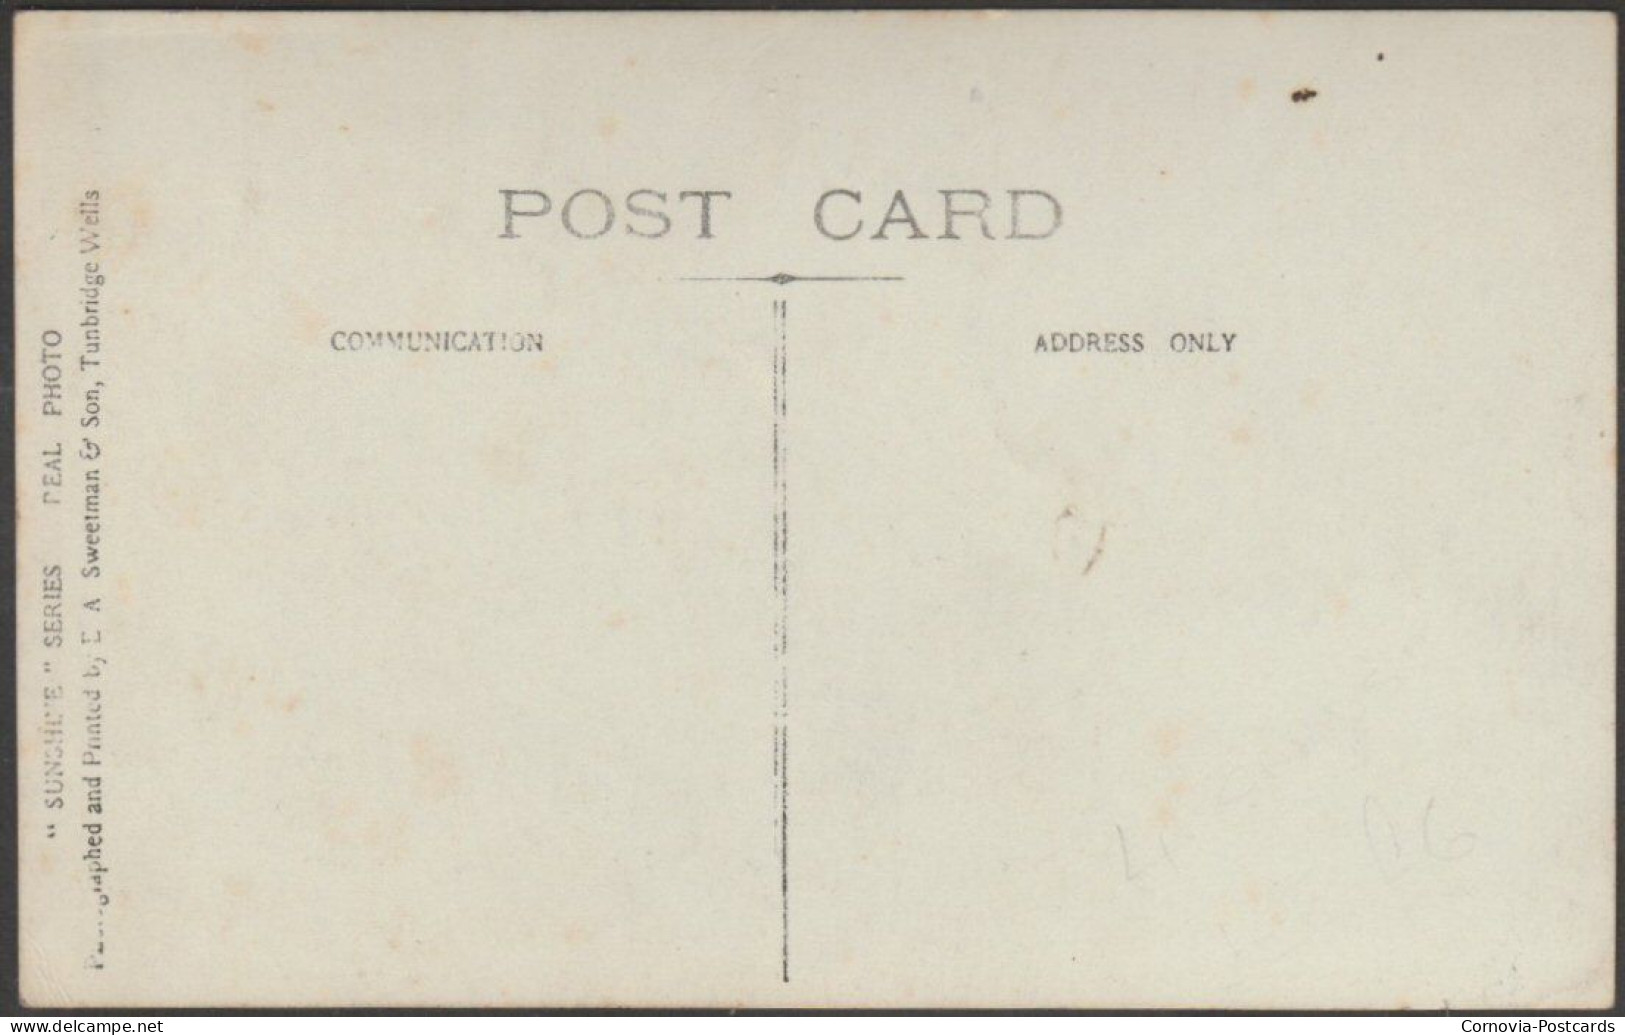 Countisbury Hill, Lynmouth, Devon, C.1930 - Sweetman RP Postcard - Lynmouth & Lynton